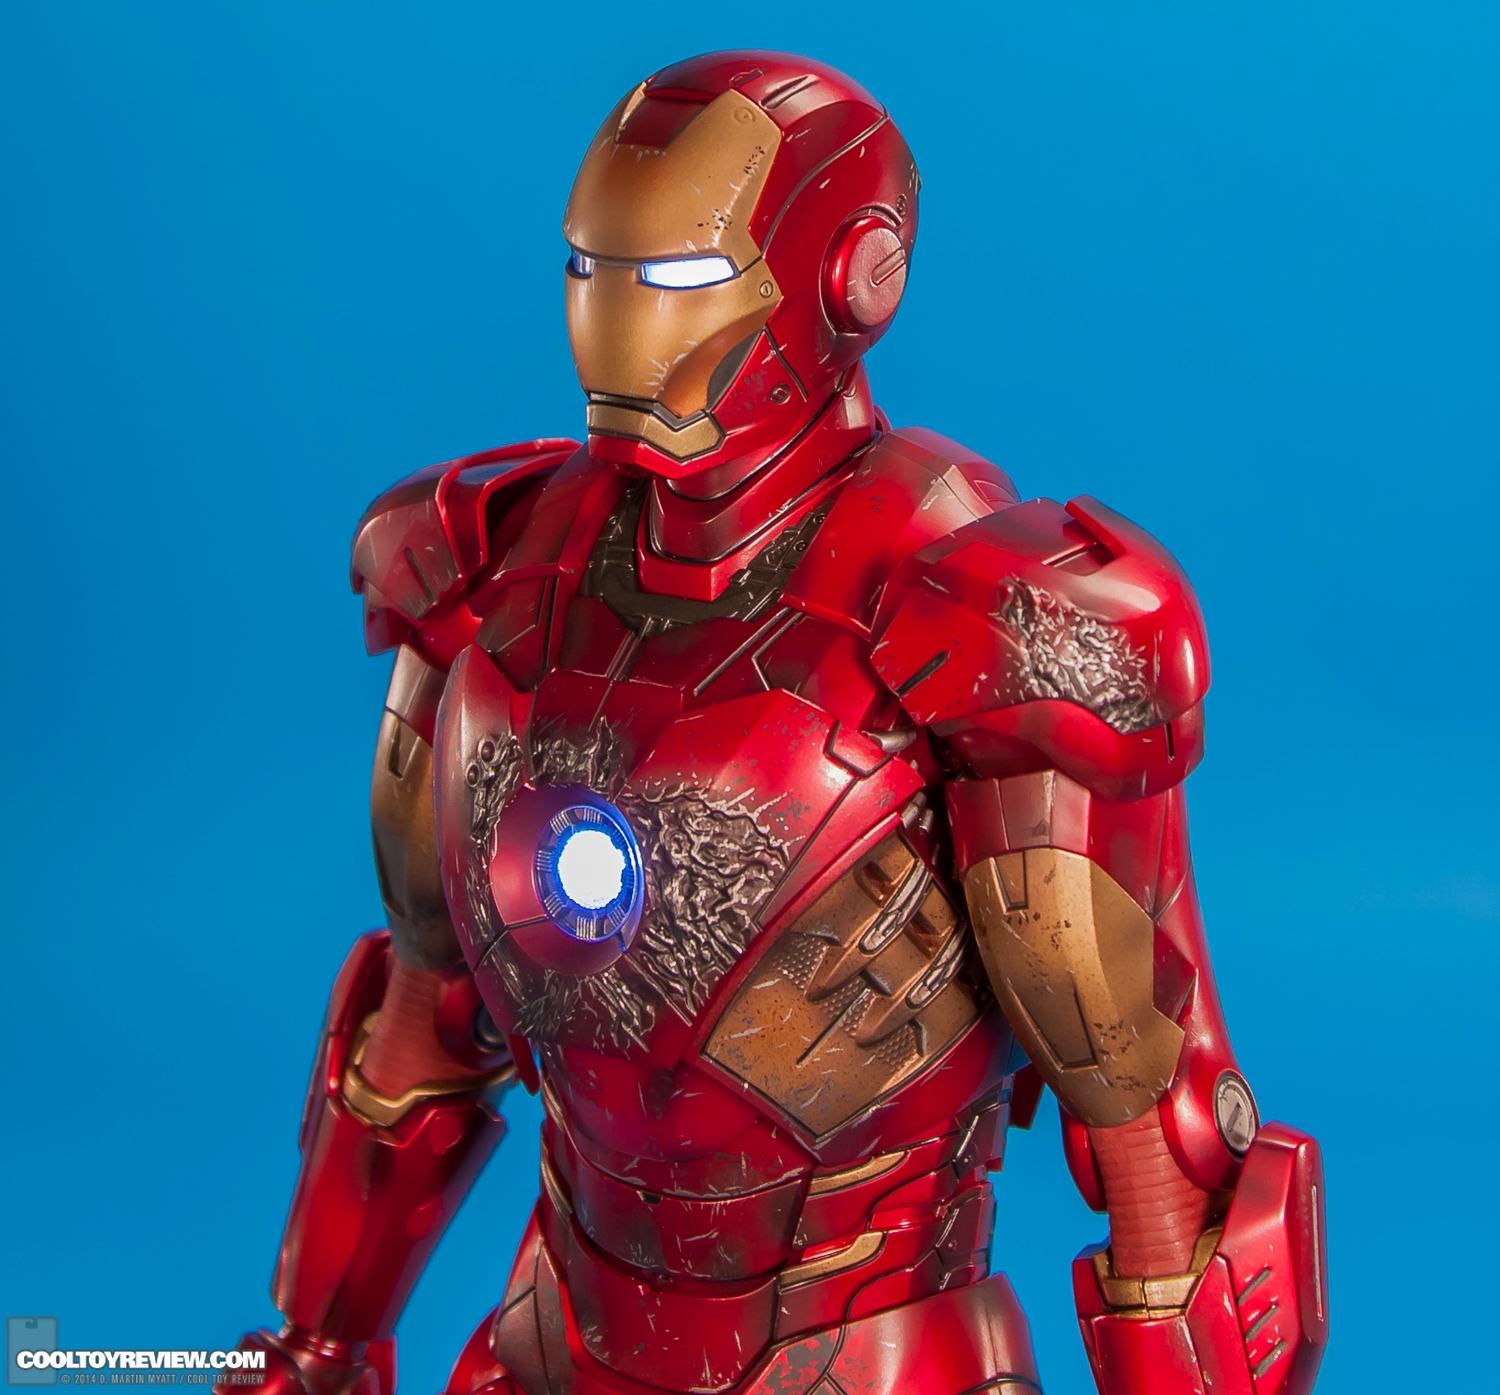 Iron-Man-Mark-VII-Battle-Damaged-Avengers-Hot-Toys-007.jpg